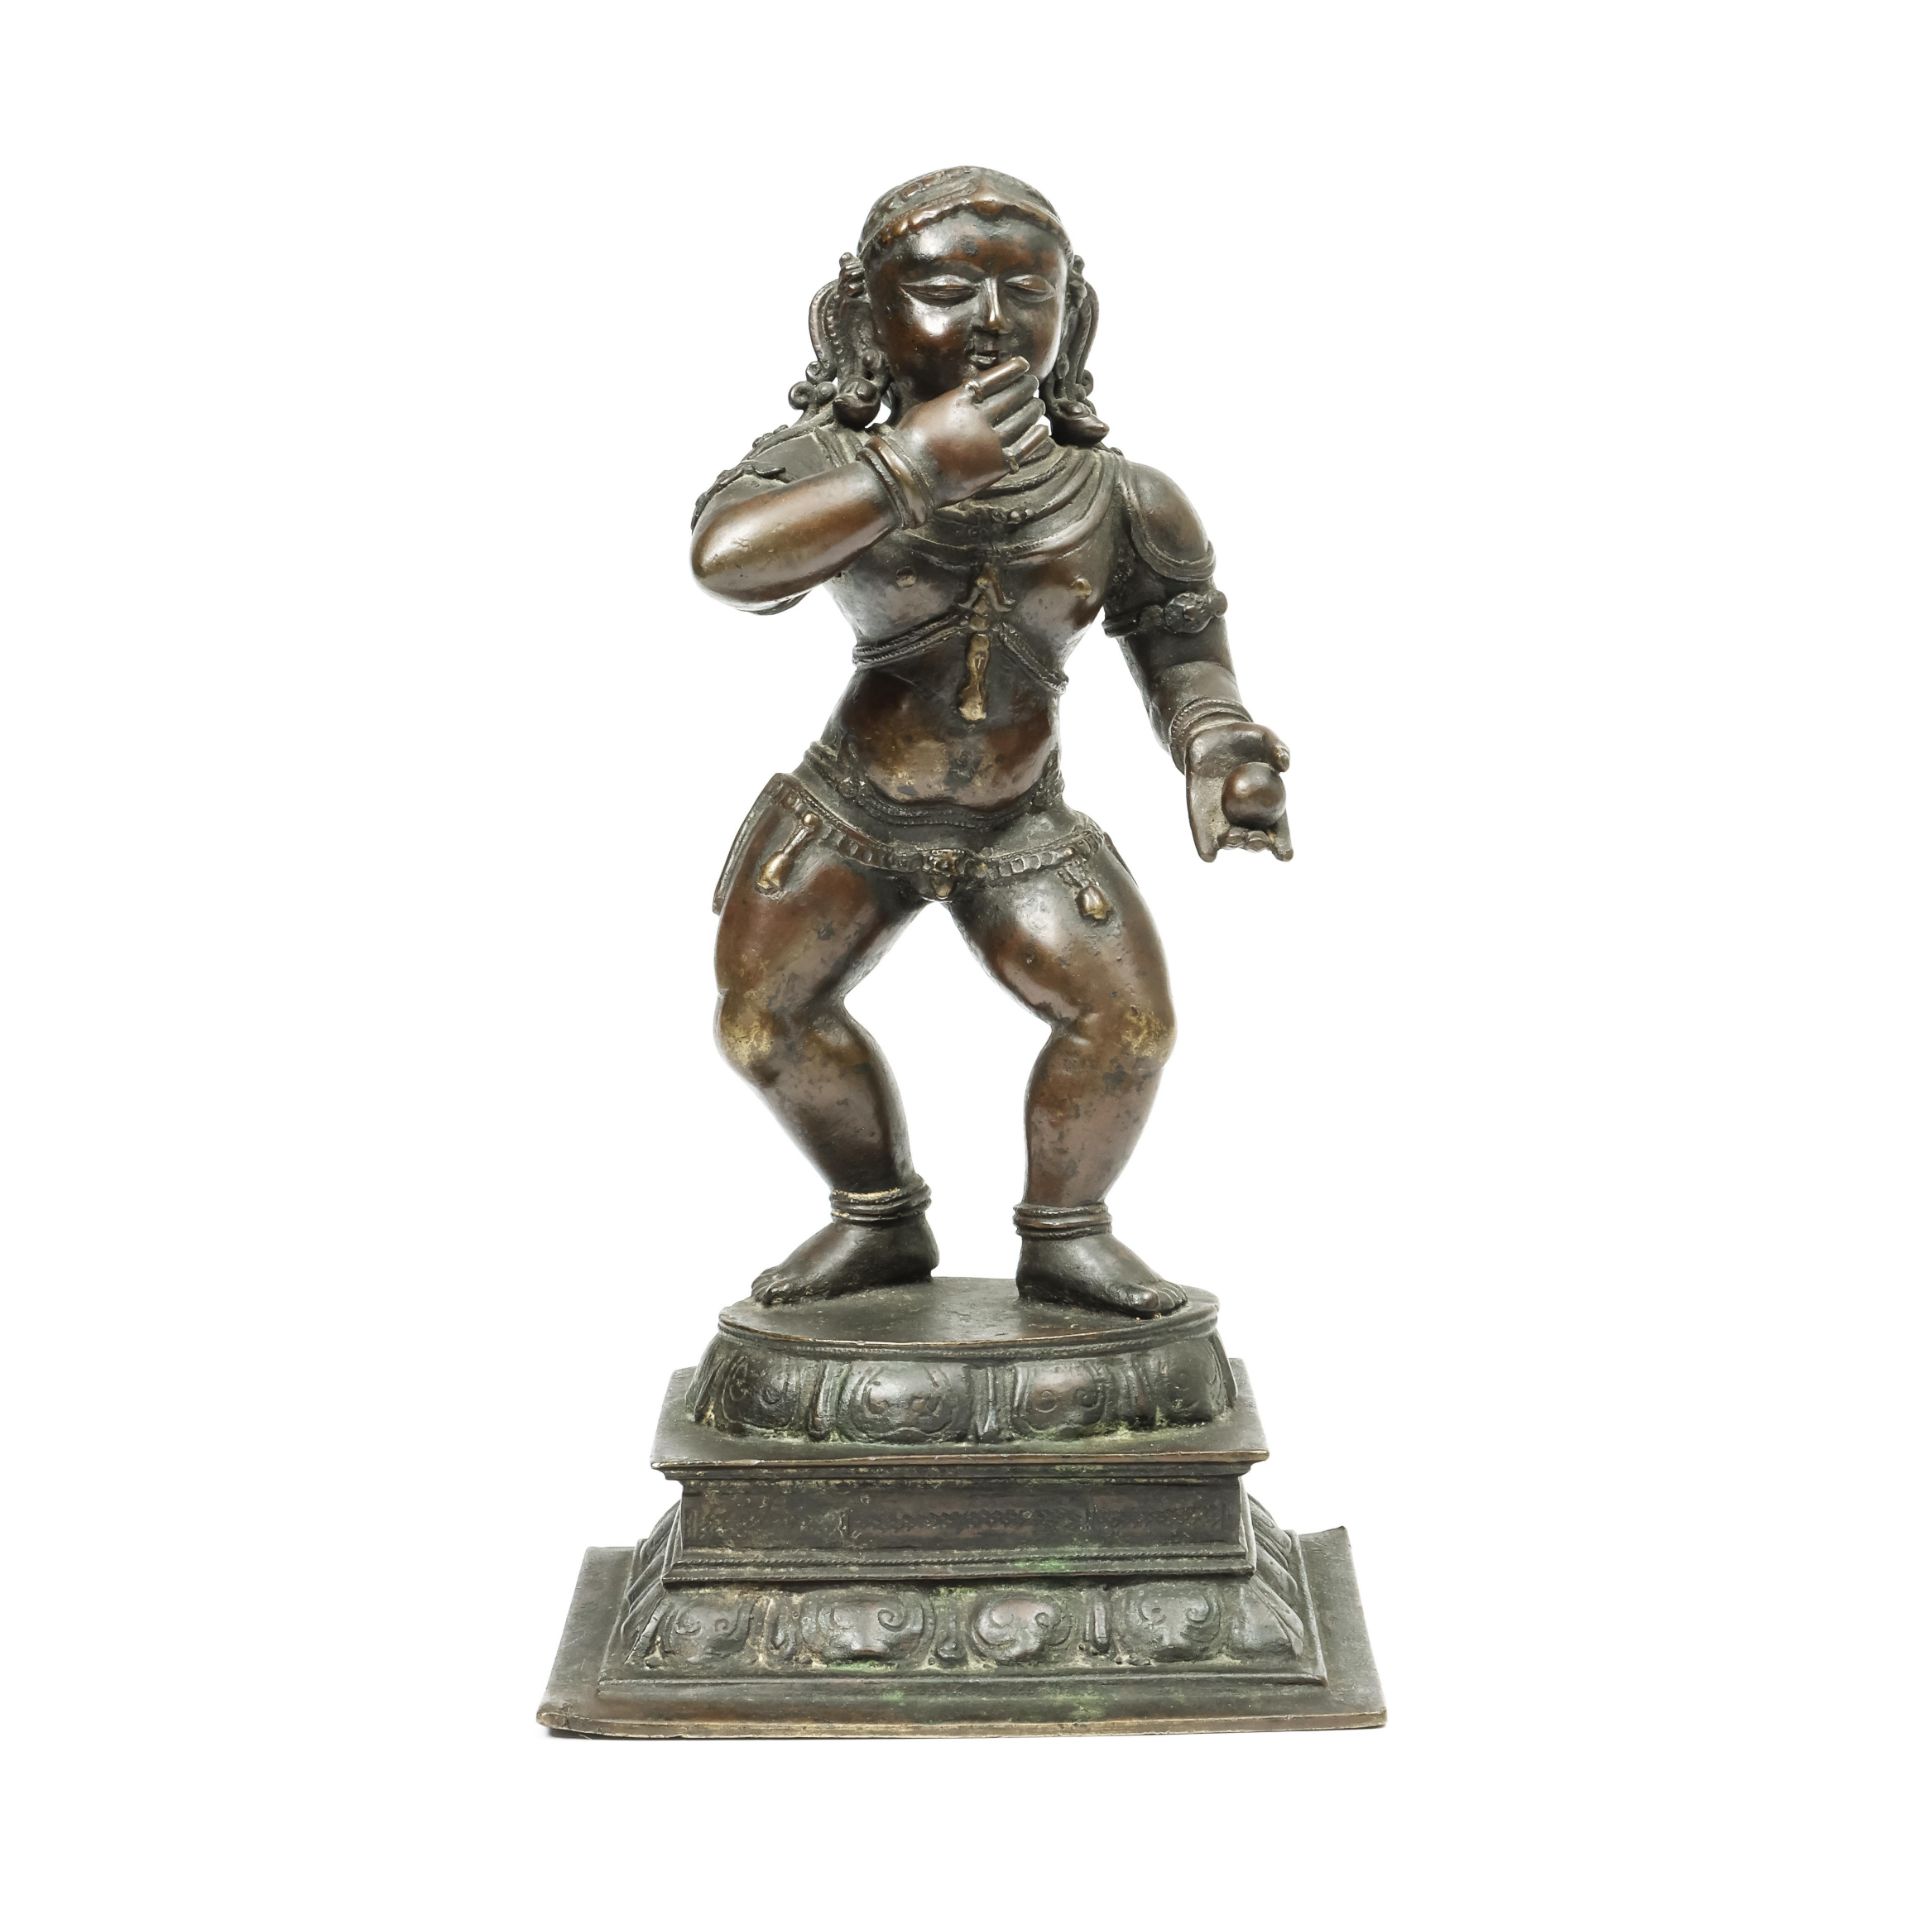 South India, a bronze figure of dancing Krishna, Navanita-nritta-krsna, 19th-20th century;